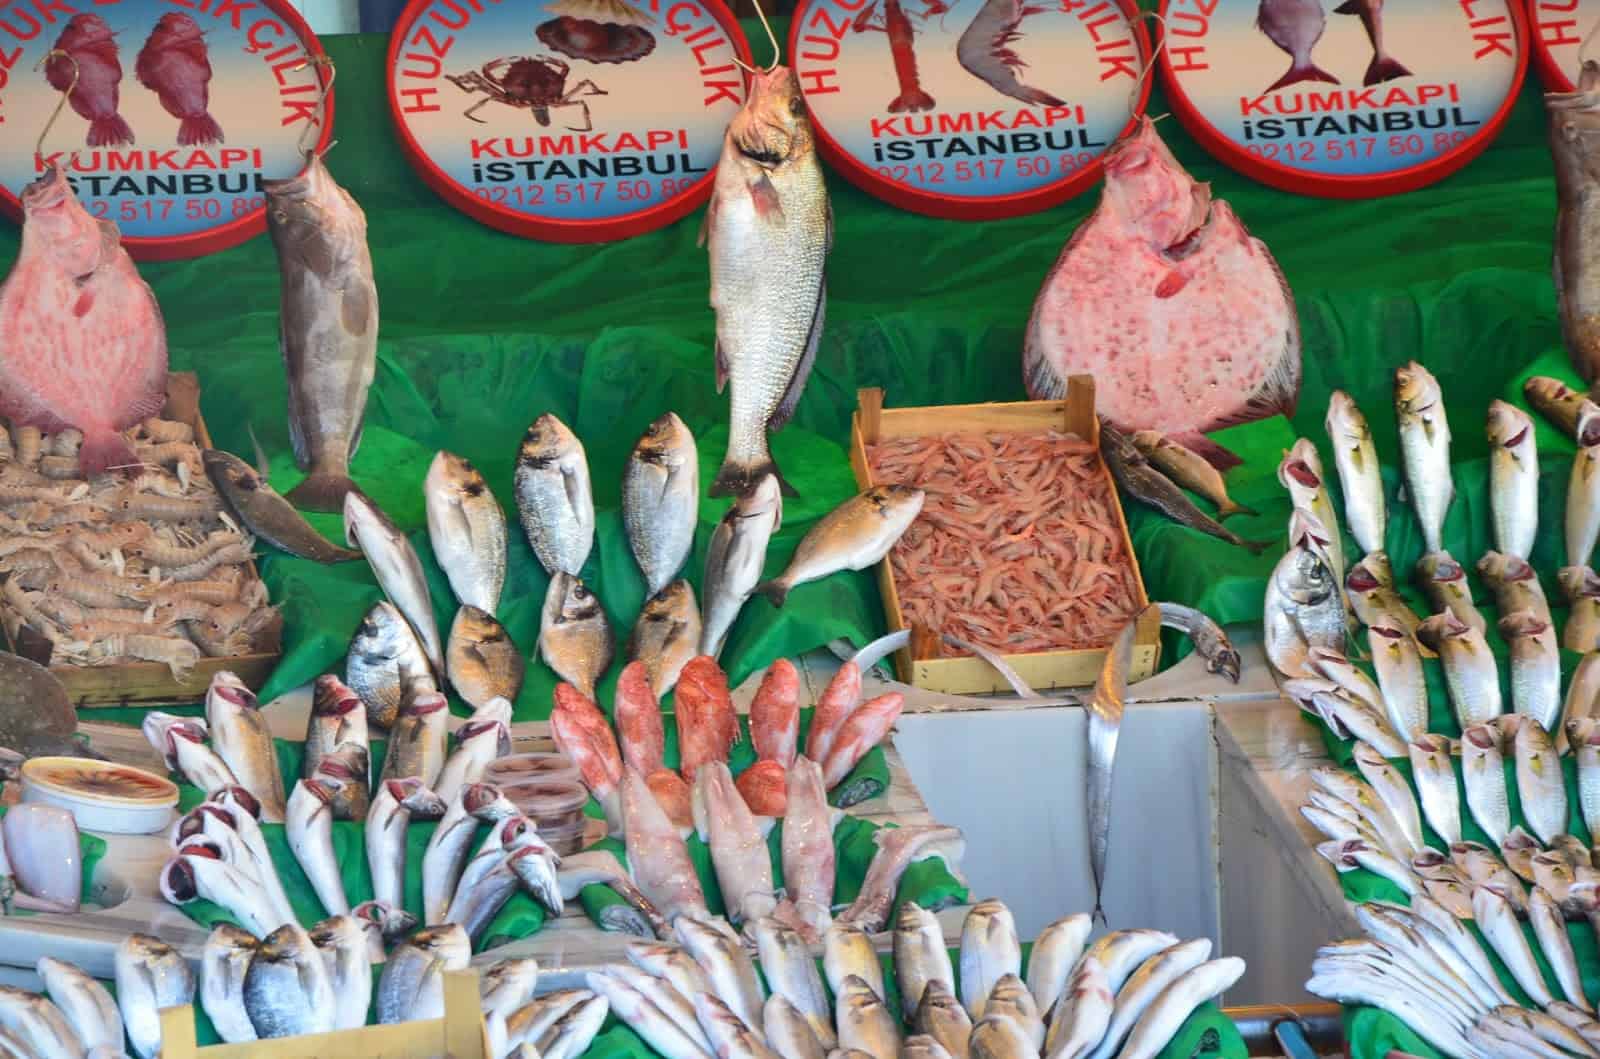 Kumkapı fish market in Kumkapı, Fatih, Istanbul, Turkey